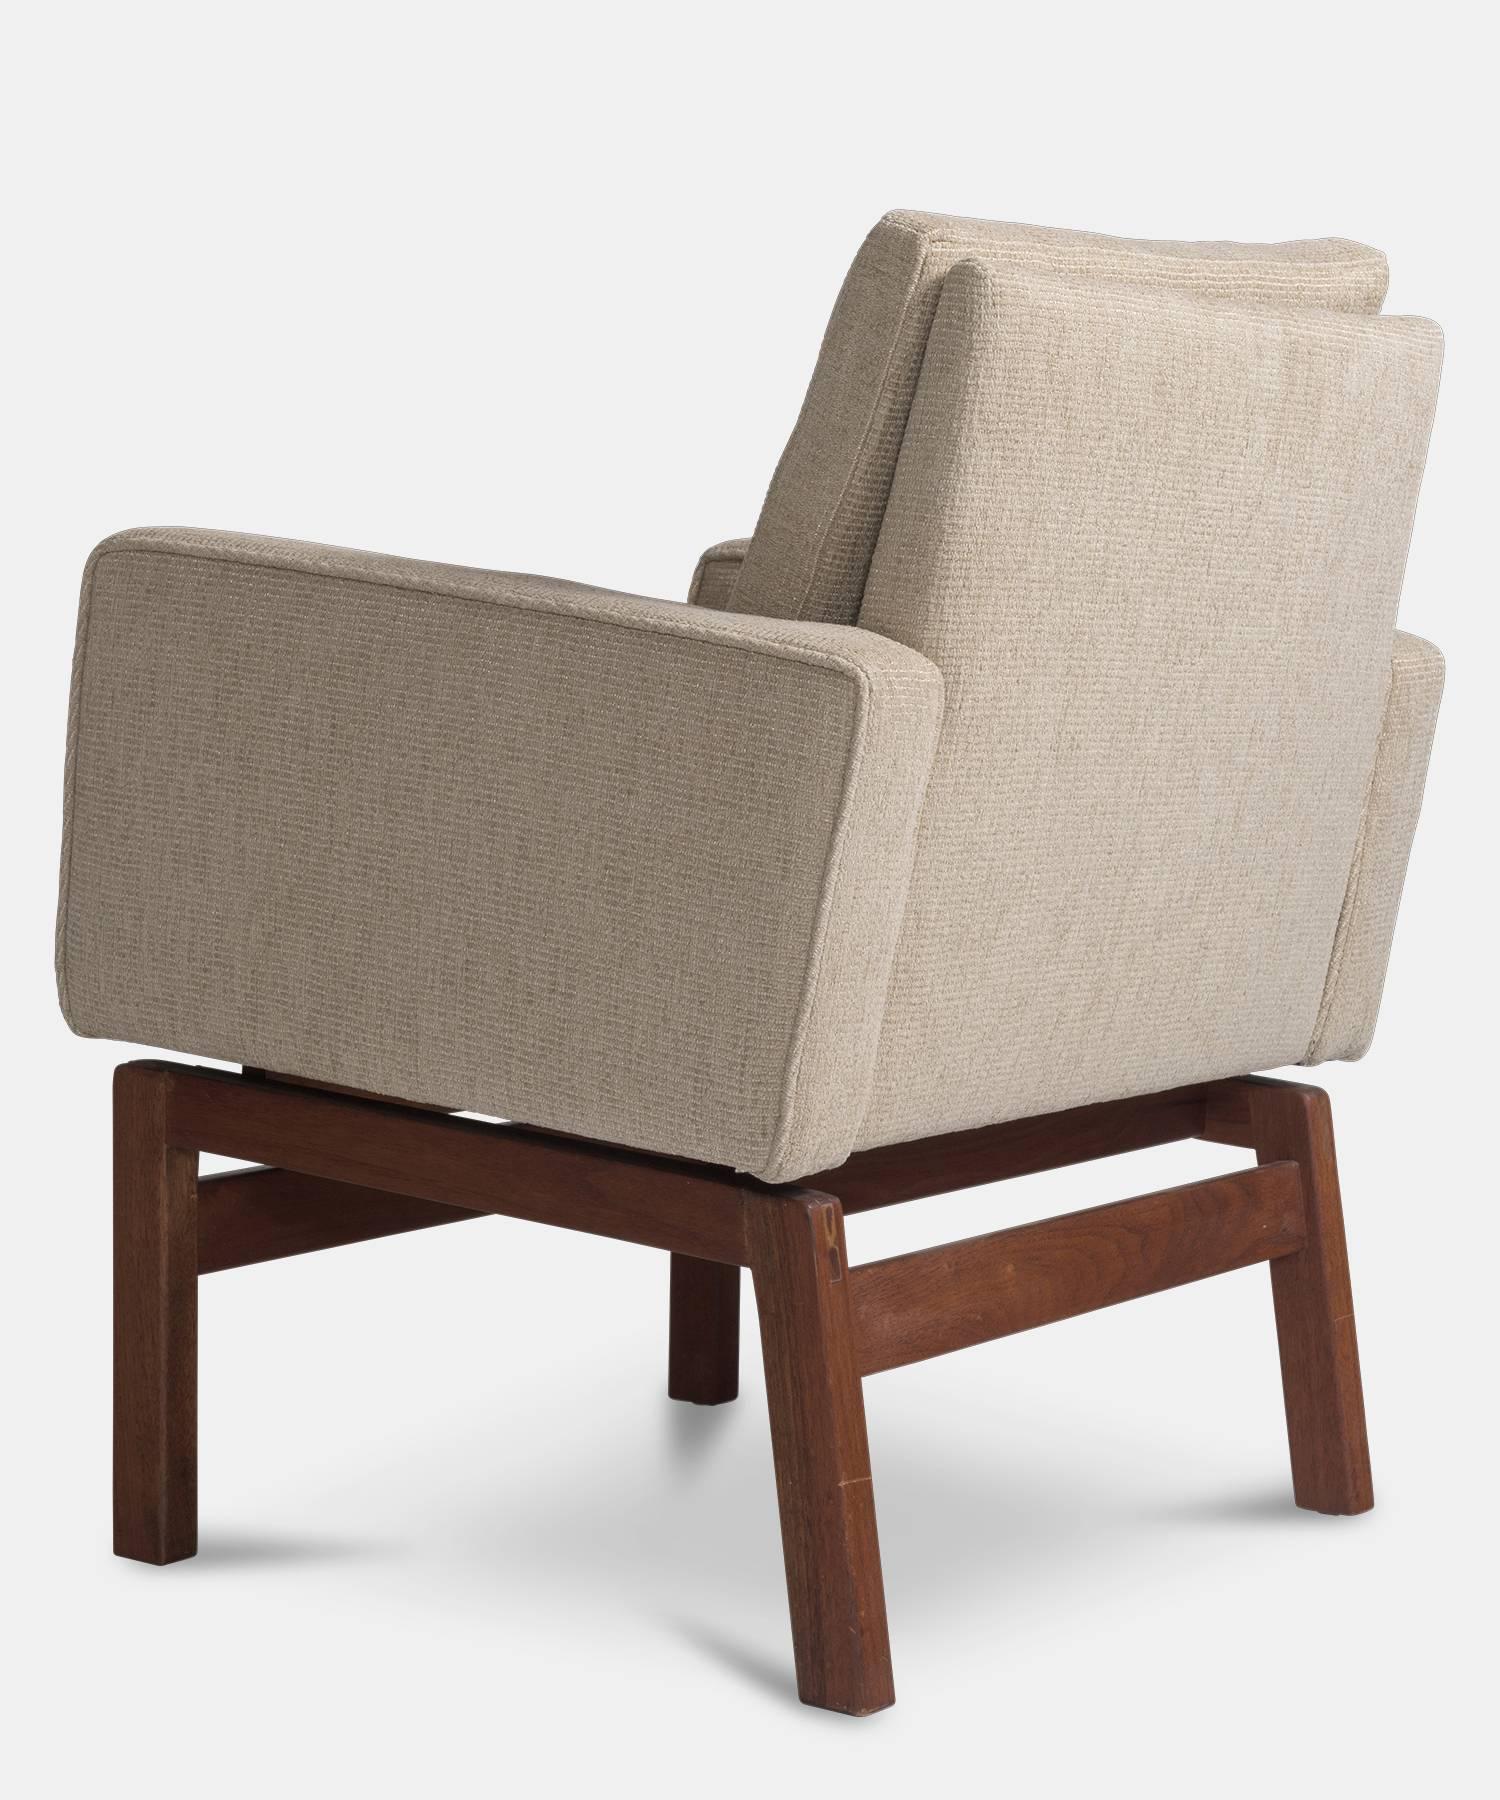 Late 20th Century Jens Risom Modern Lounge Chairs, circa 1975